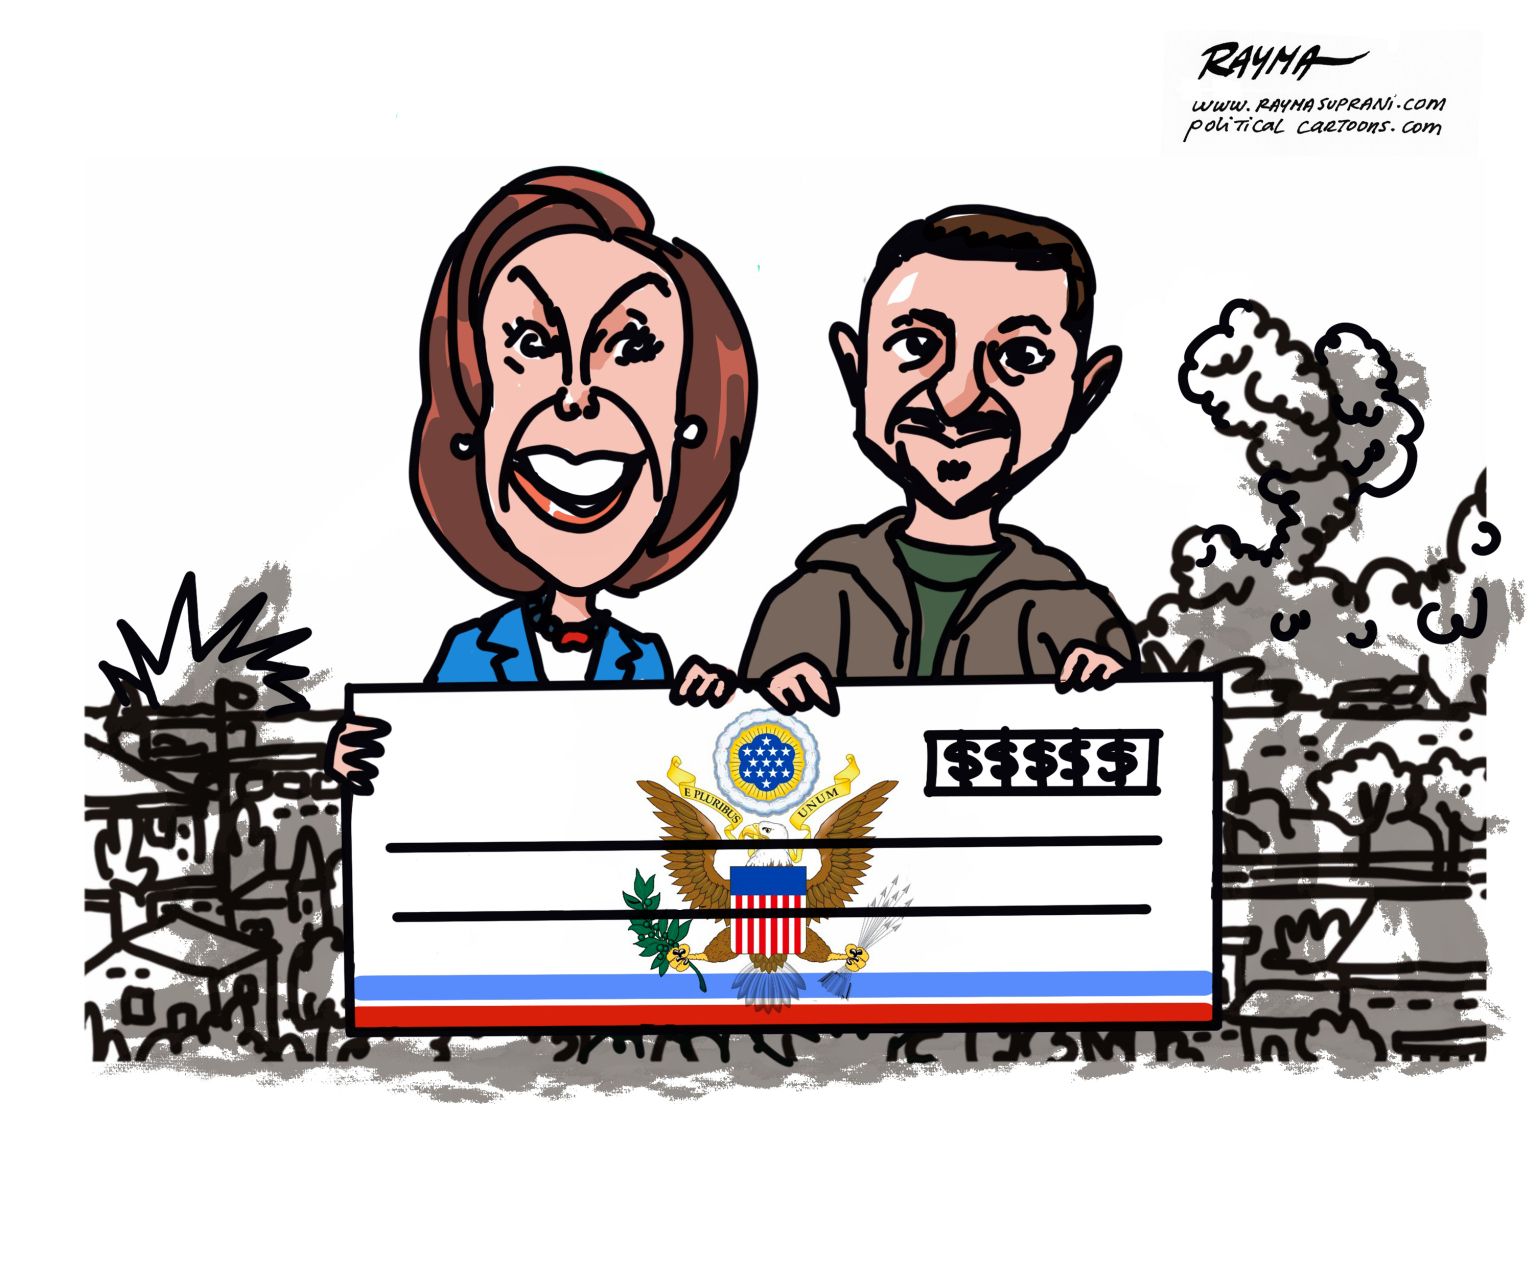 Pelosi in Ukraine | News JustIN Political Cartoon - newsjustin.press